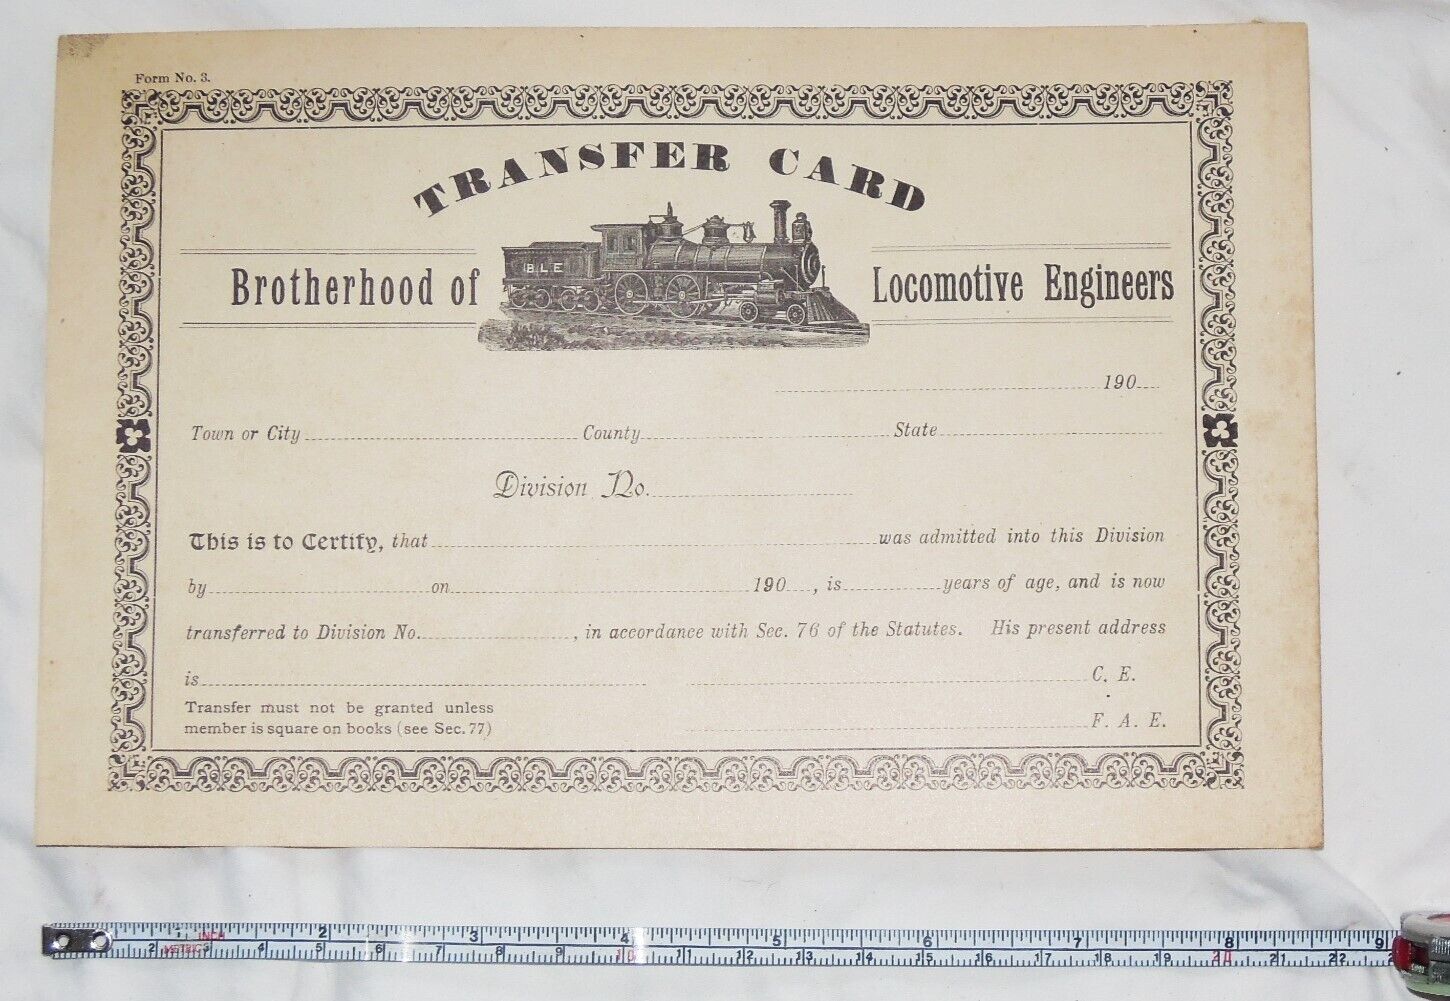 Brotherhood of Locomotive Engineers 190x Membership & Transfer Forms, not repro